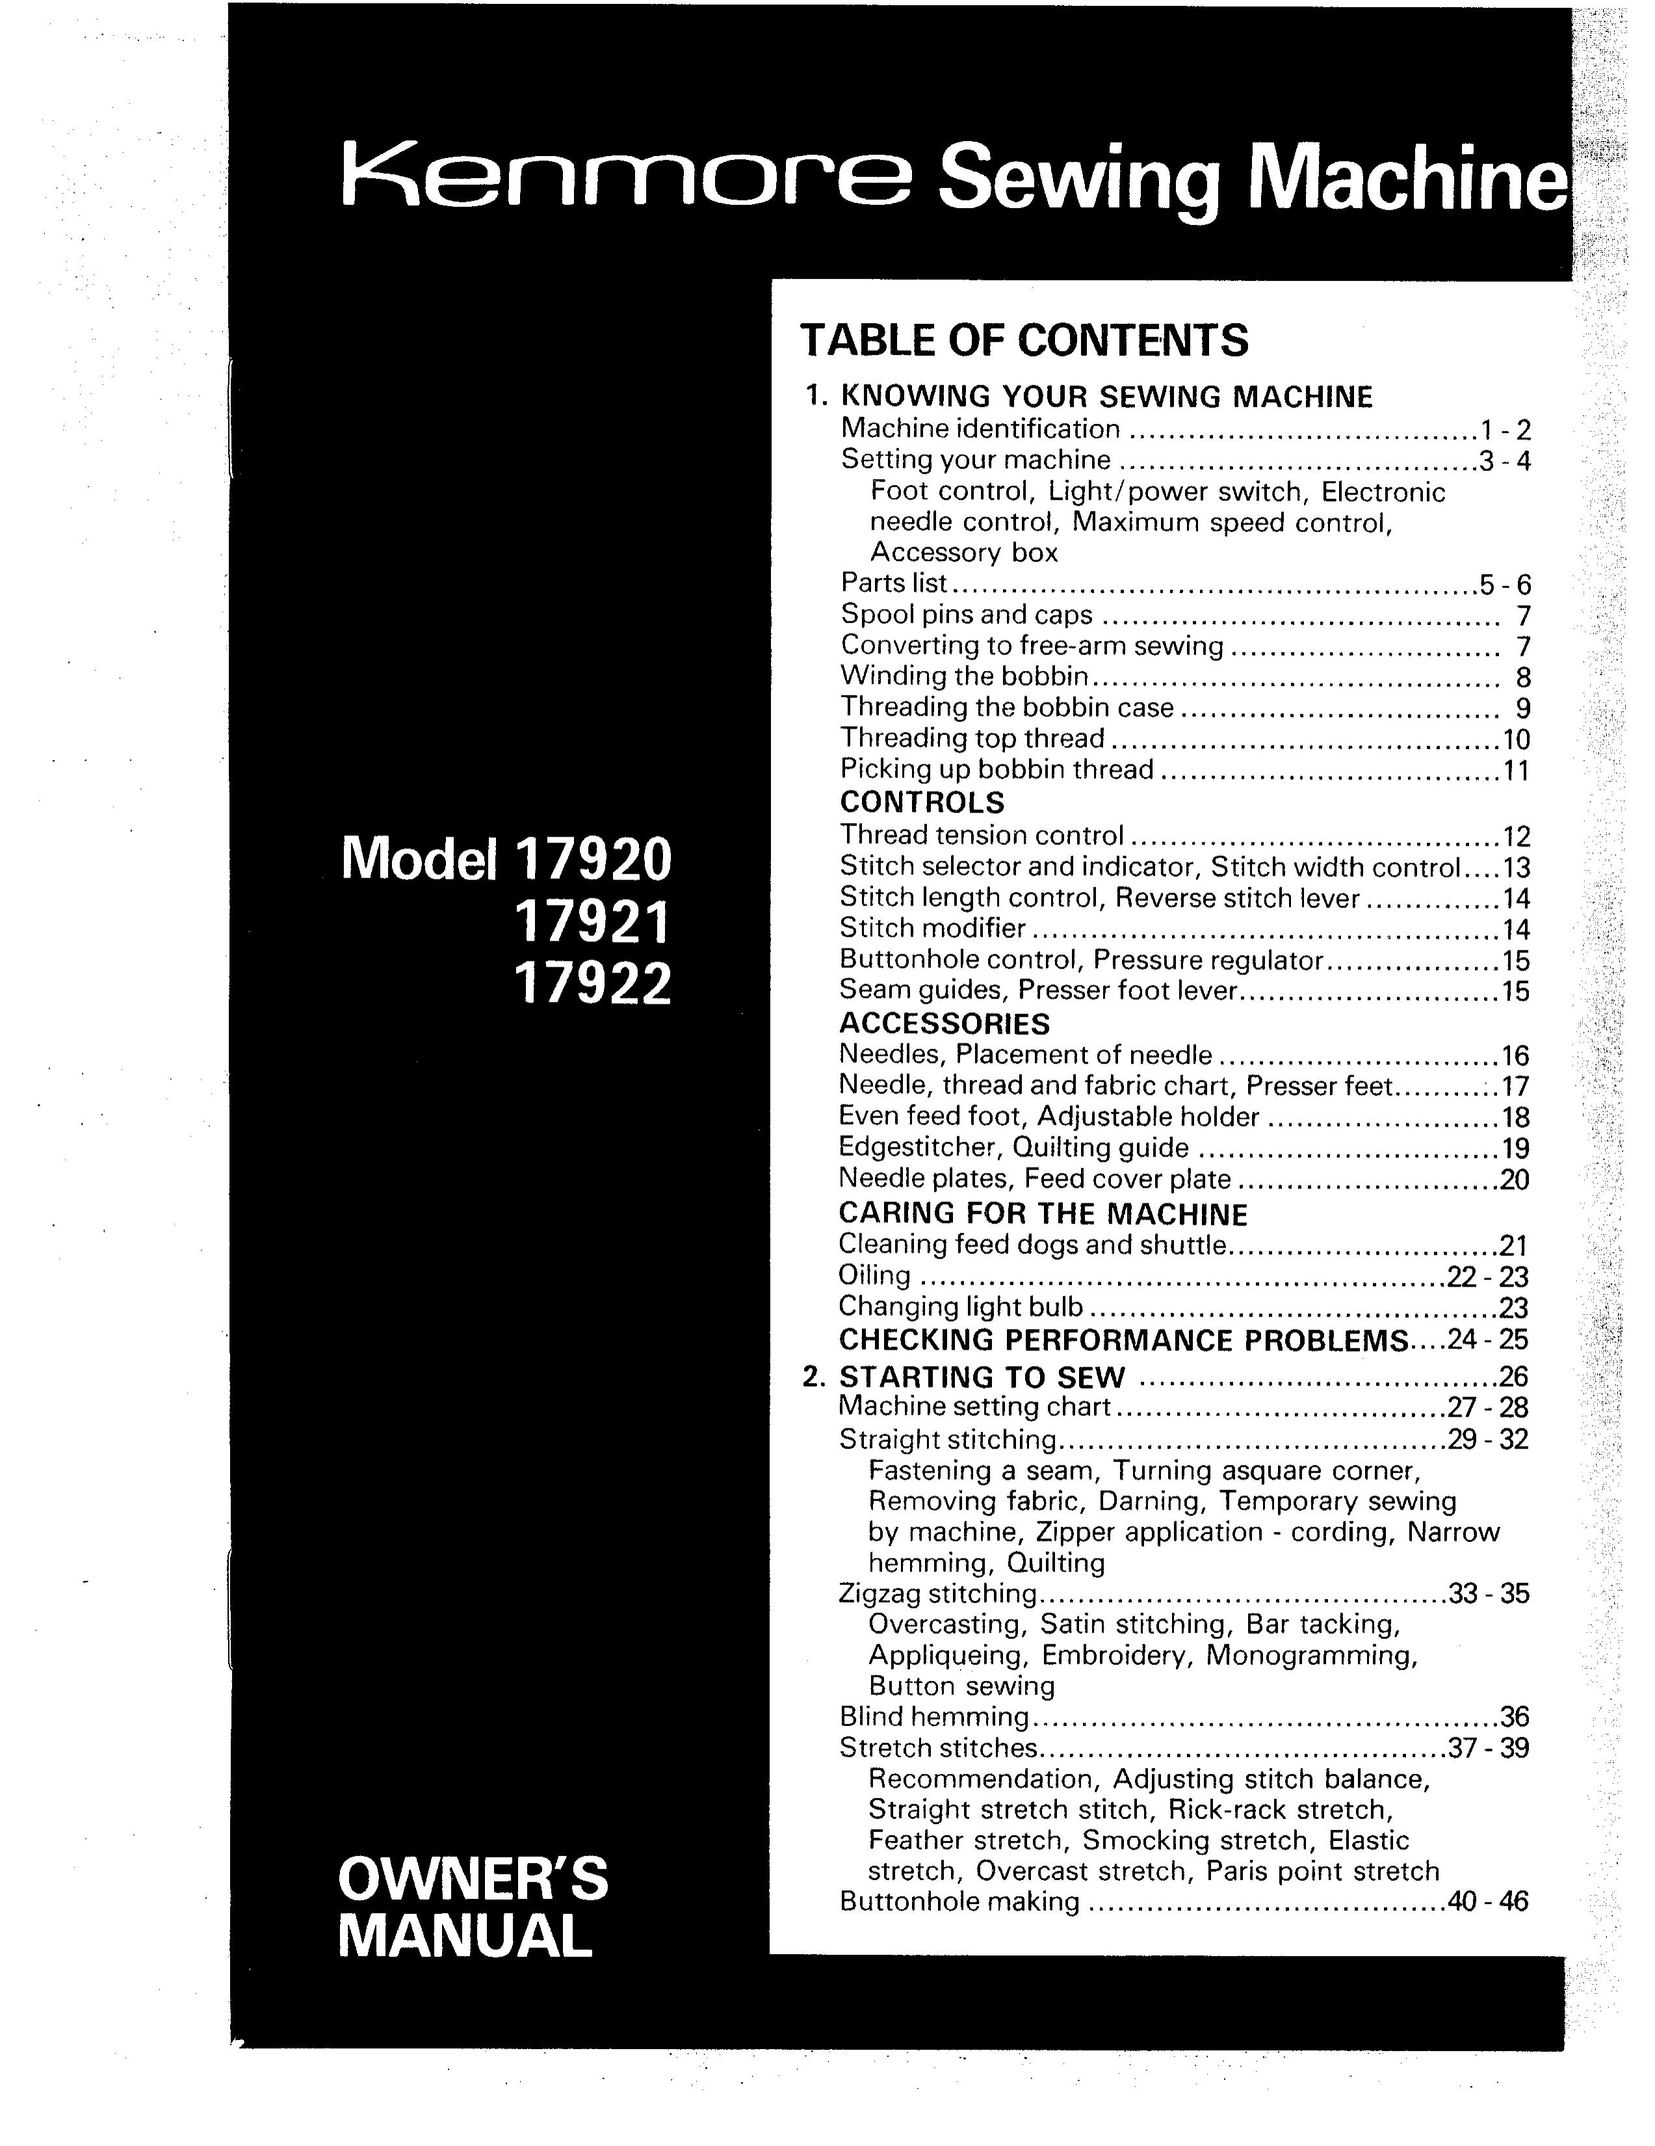 Kenmore 17922 Sewing Machine User Manual